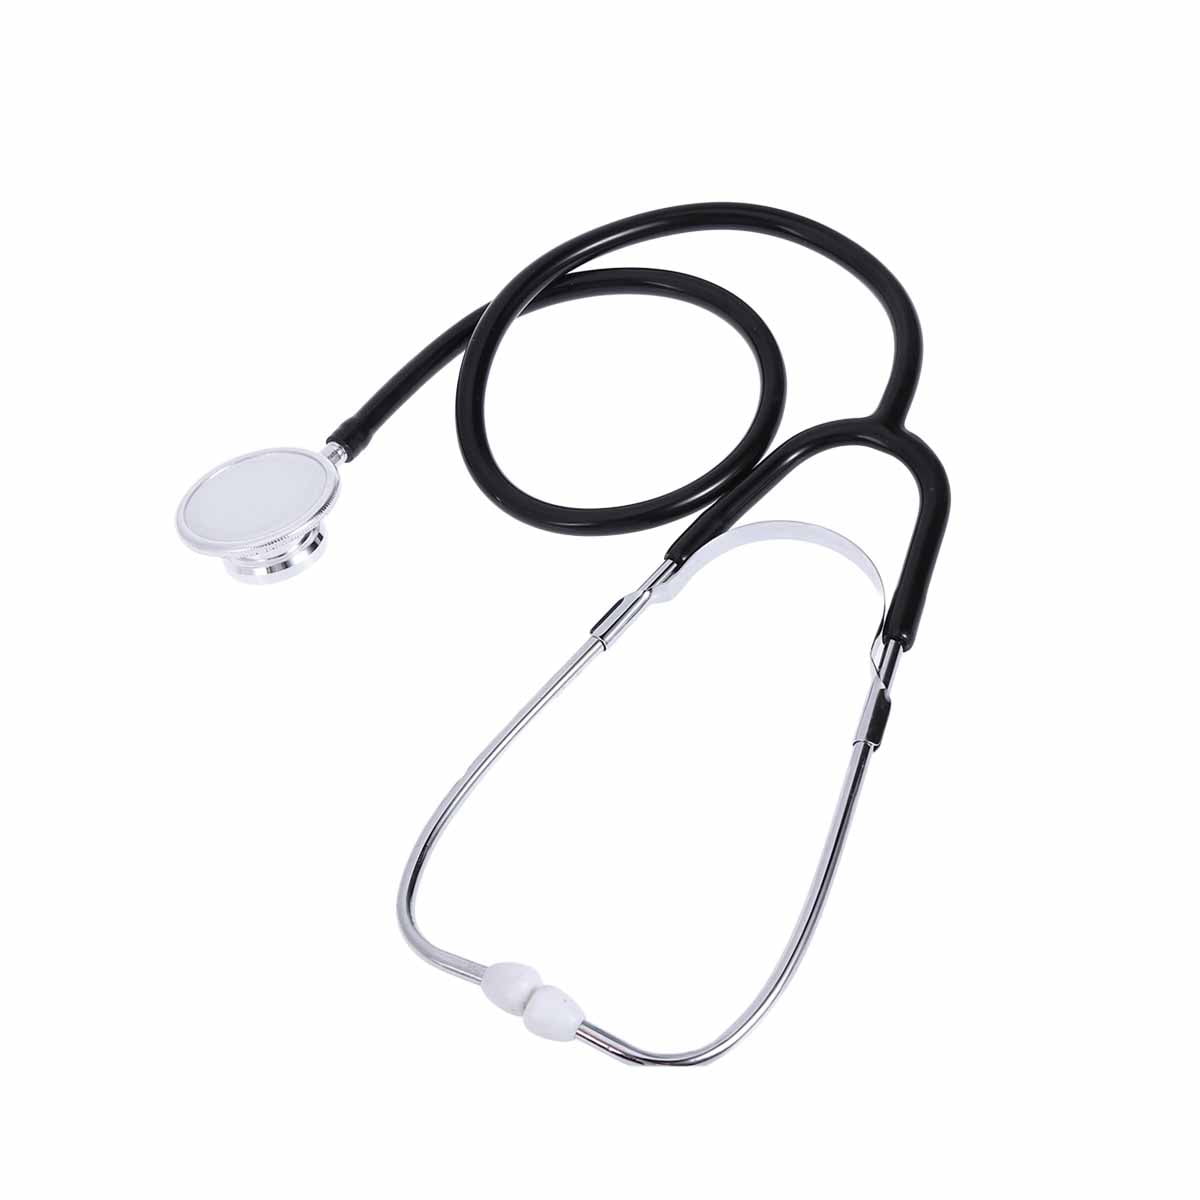 Basic Medical Stethoscope Single Head Professional Cardiology Stethoscope  Doctor Student Vet Nurse Medical Equipment Device